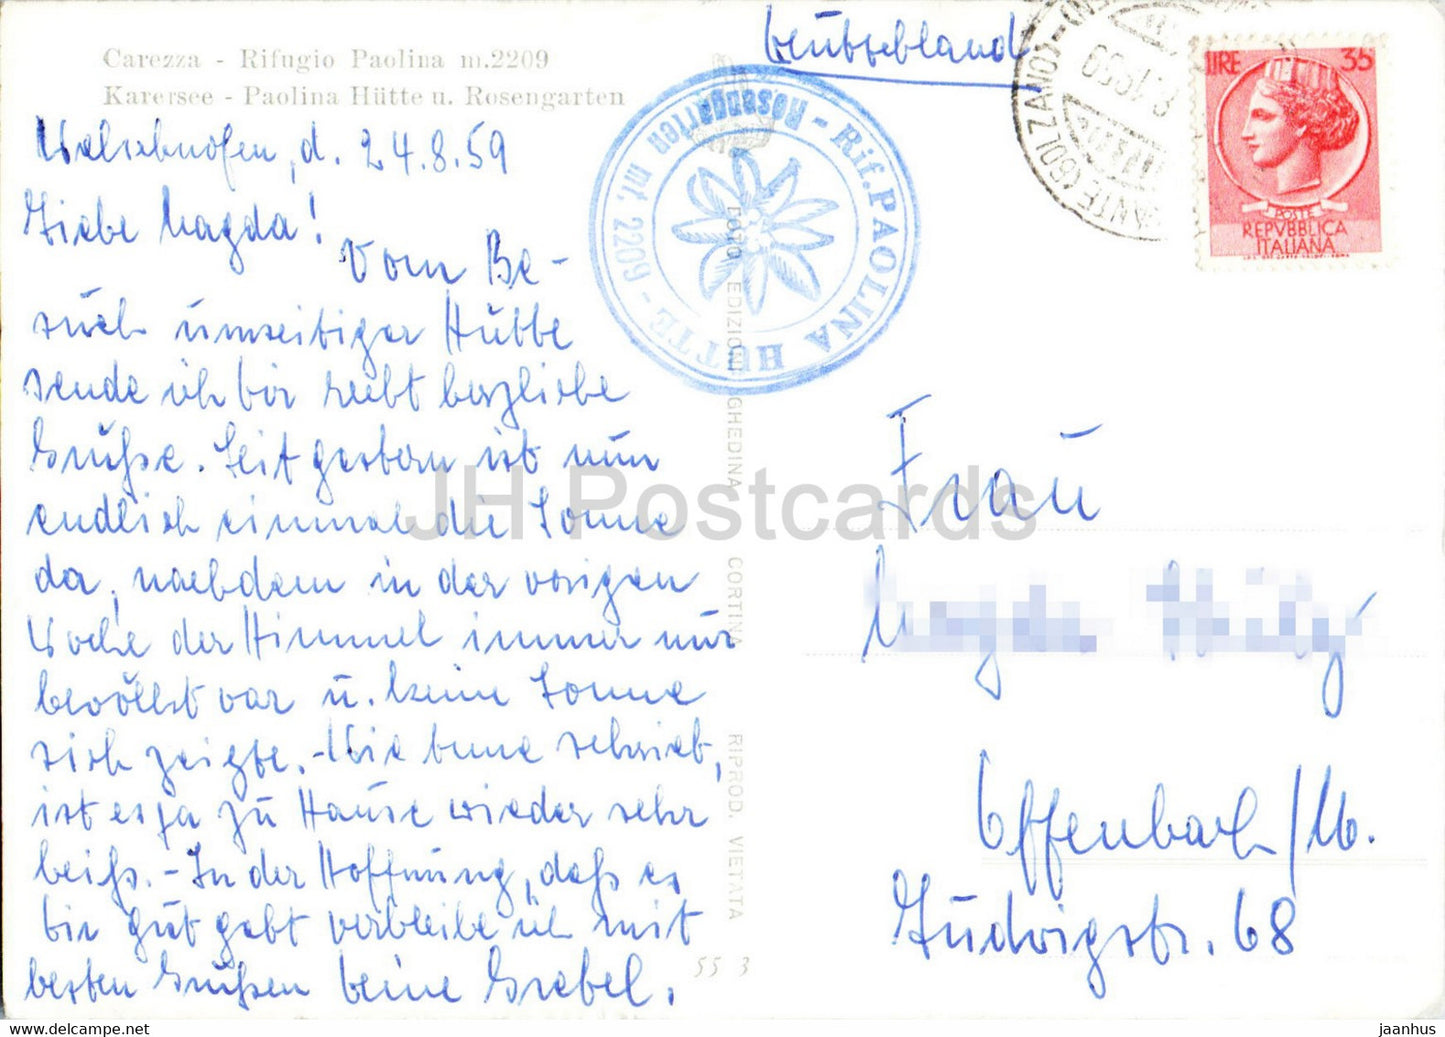 Carezza - Rifugio Paolina - Karersee - Paolina Hutte u Rosengarten - old postcard - 1959 - Italy - used